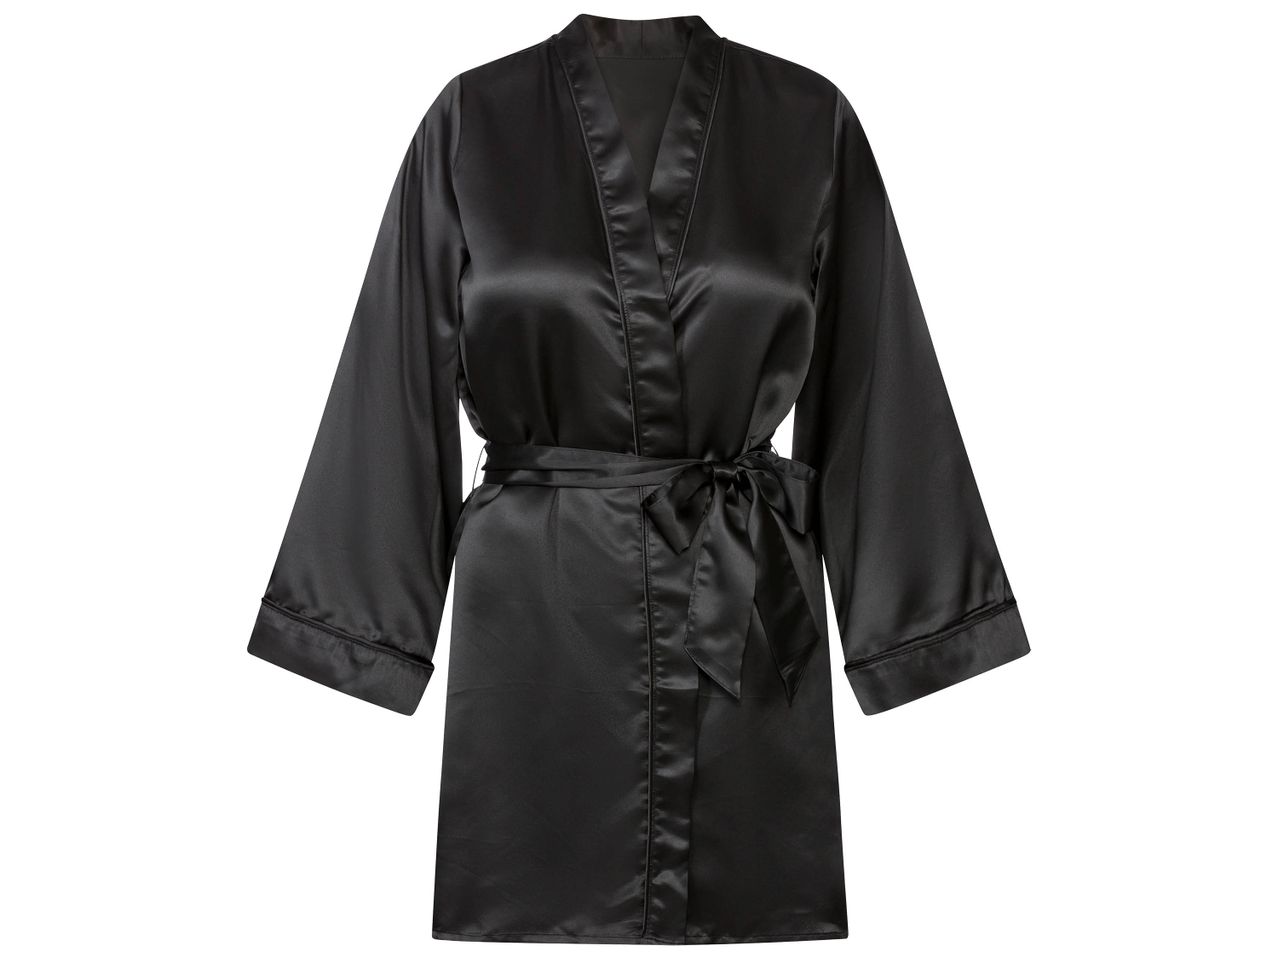 Kimono en satin , prezzo 6.99 EUR 
Kimono en satin 
- Du S au XL selon mod&egrave;le.
- ...